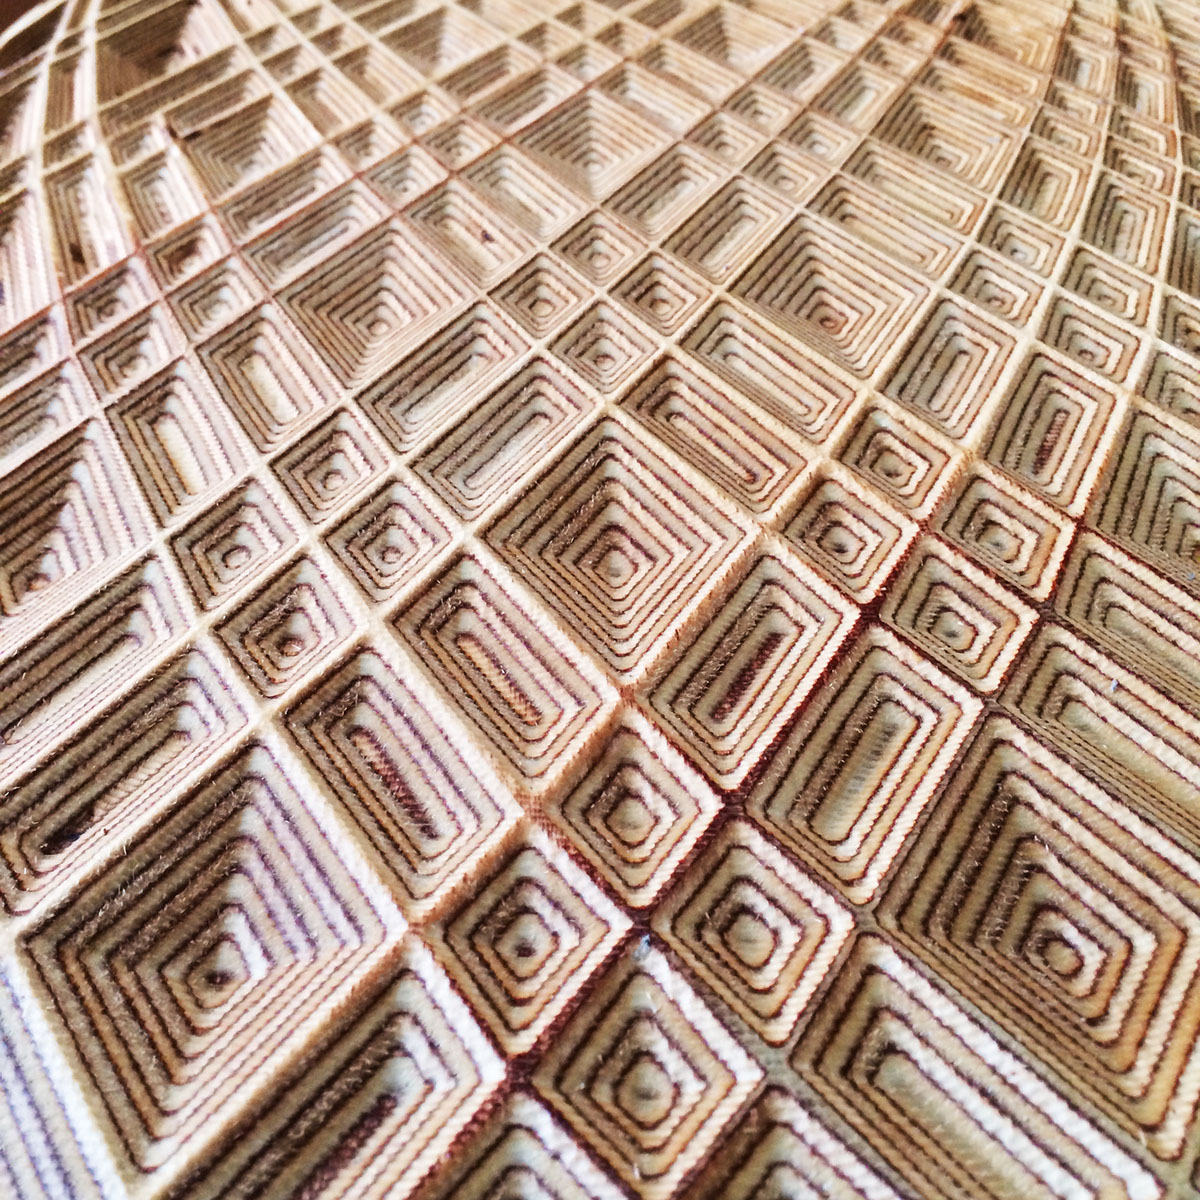 plywood cnc CNC Router wall art parametric wood working  wood art Wood Panel art pattern Rhino Grasshopper Triarchictheory